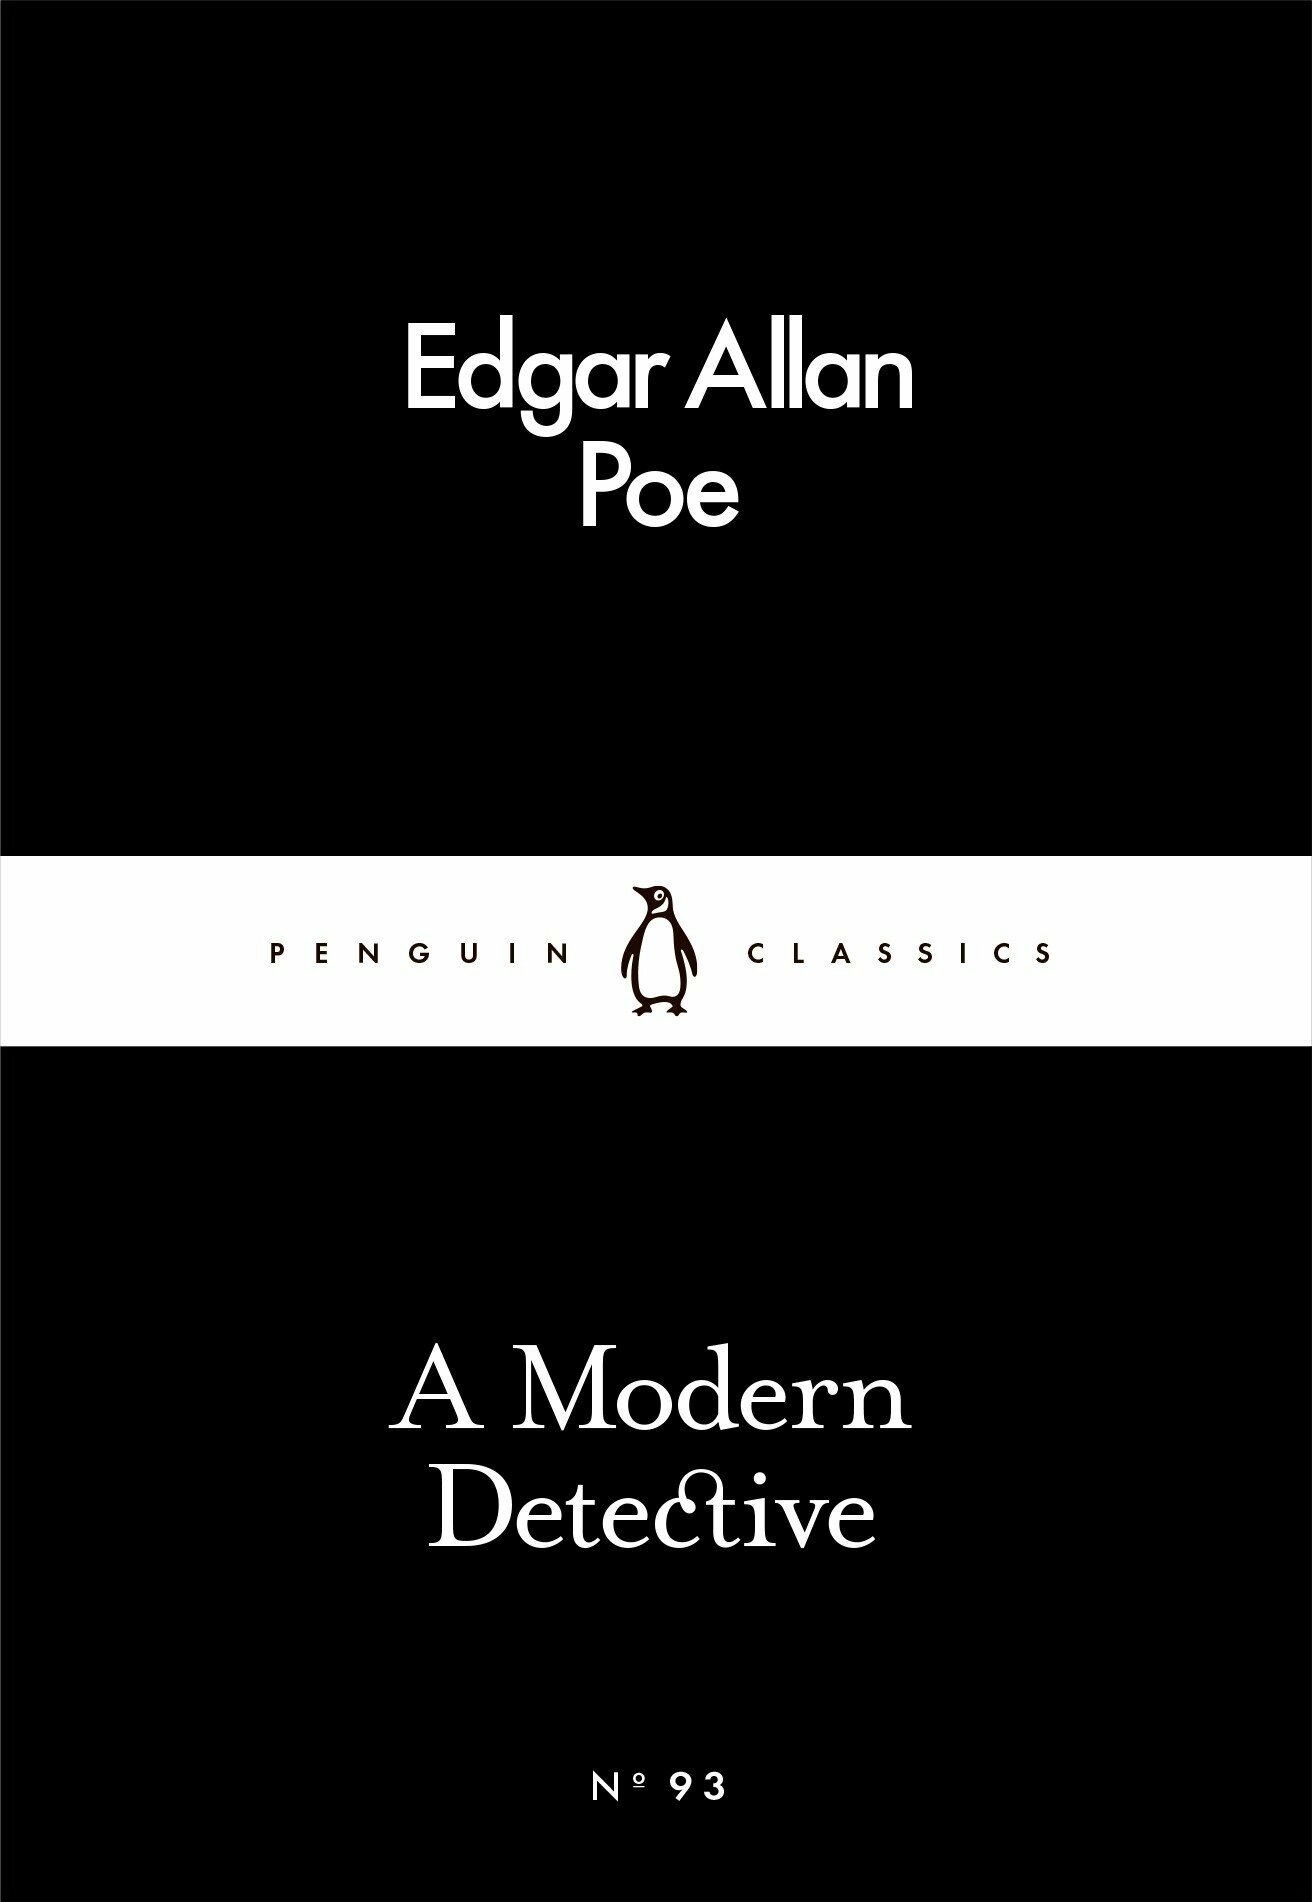 Poe Edgar Allan "A Modern Detective"